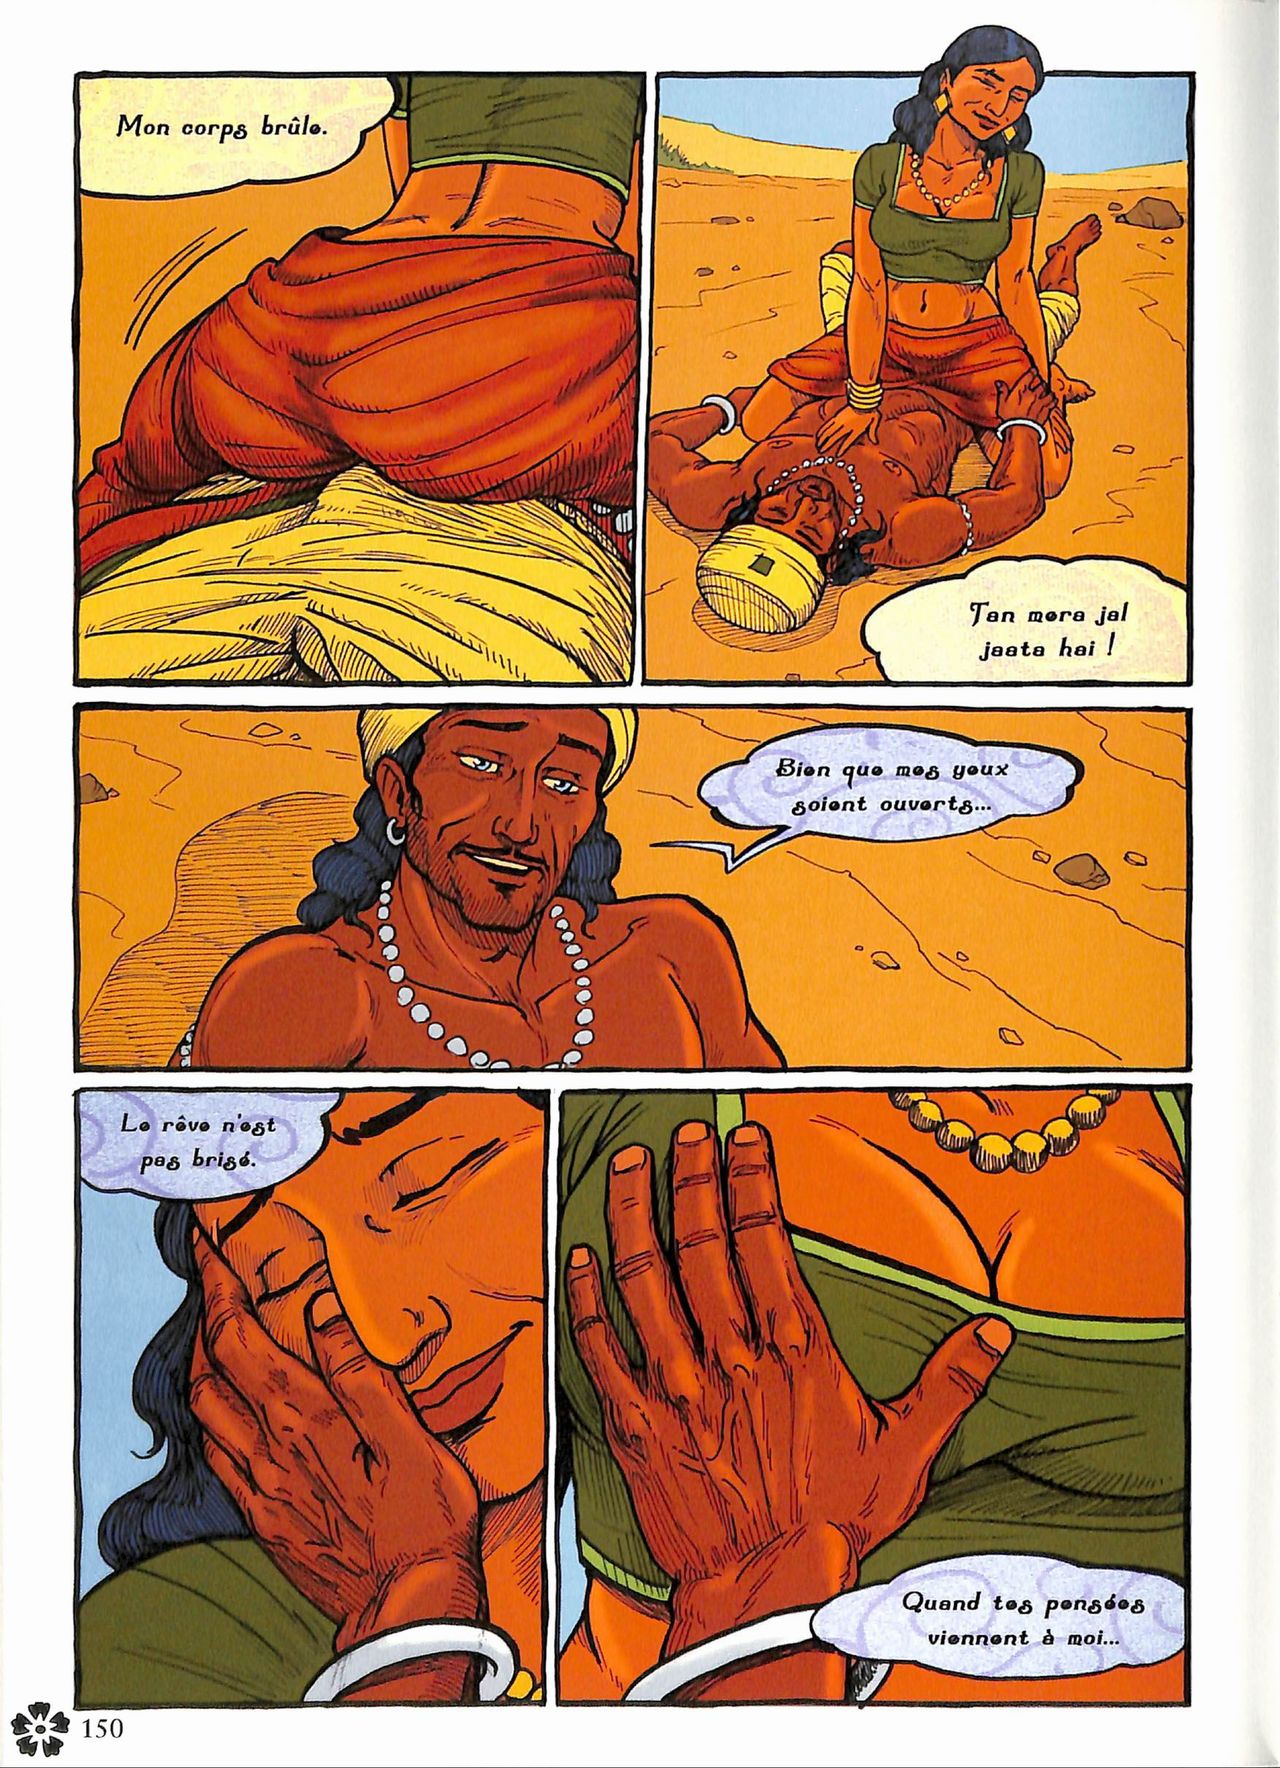 Kama Sutra en bandes dessinées - Kama Sutra with Comics numero d'image 150